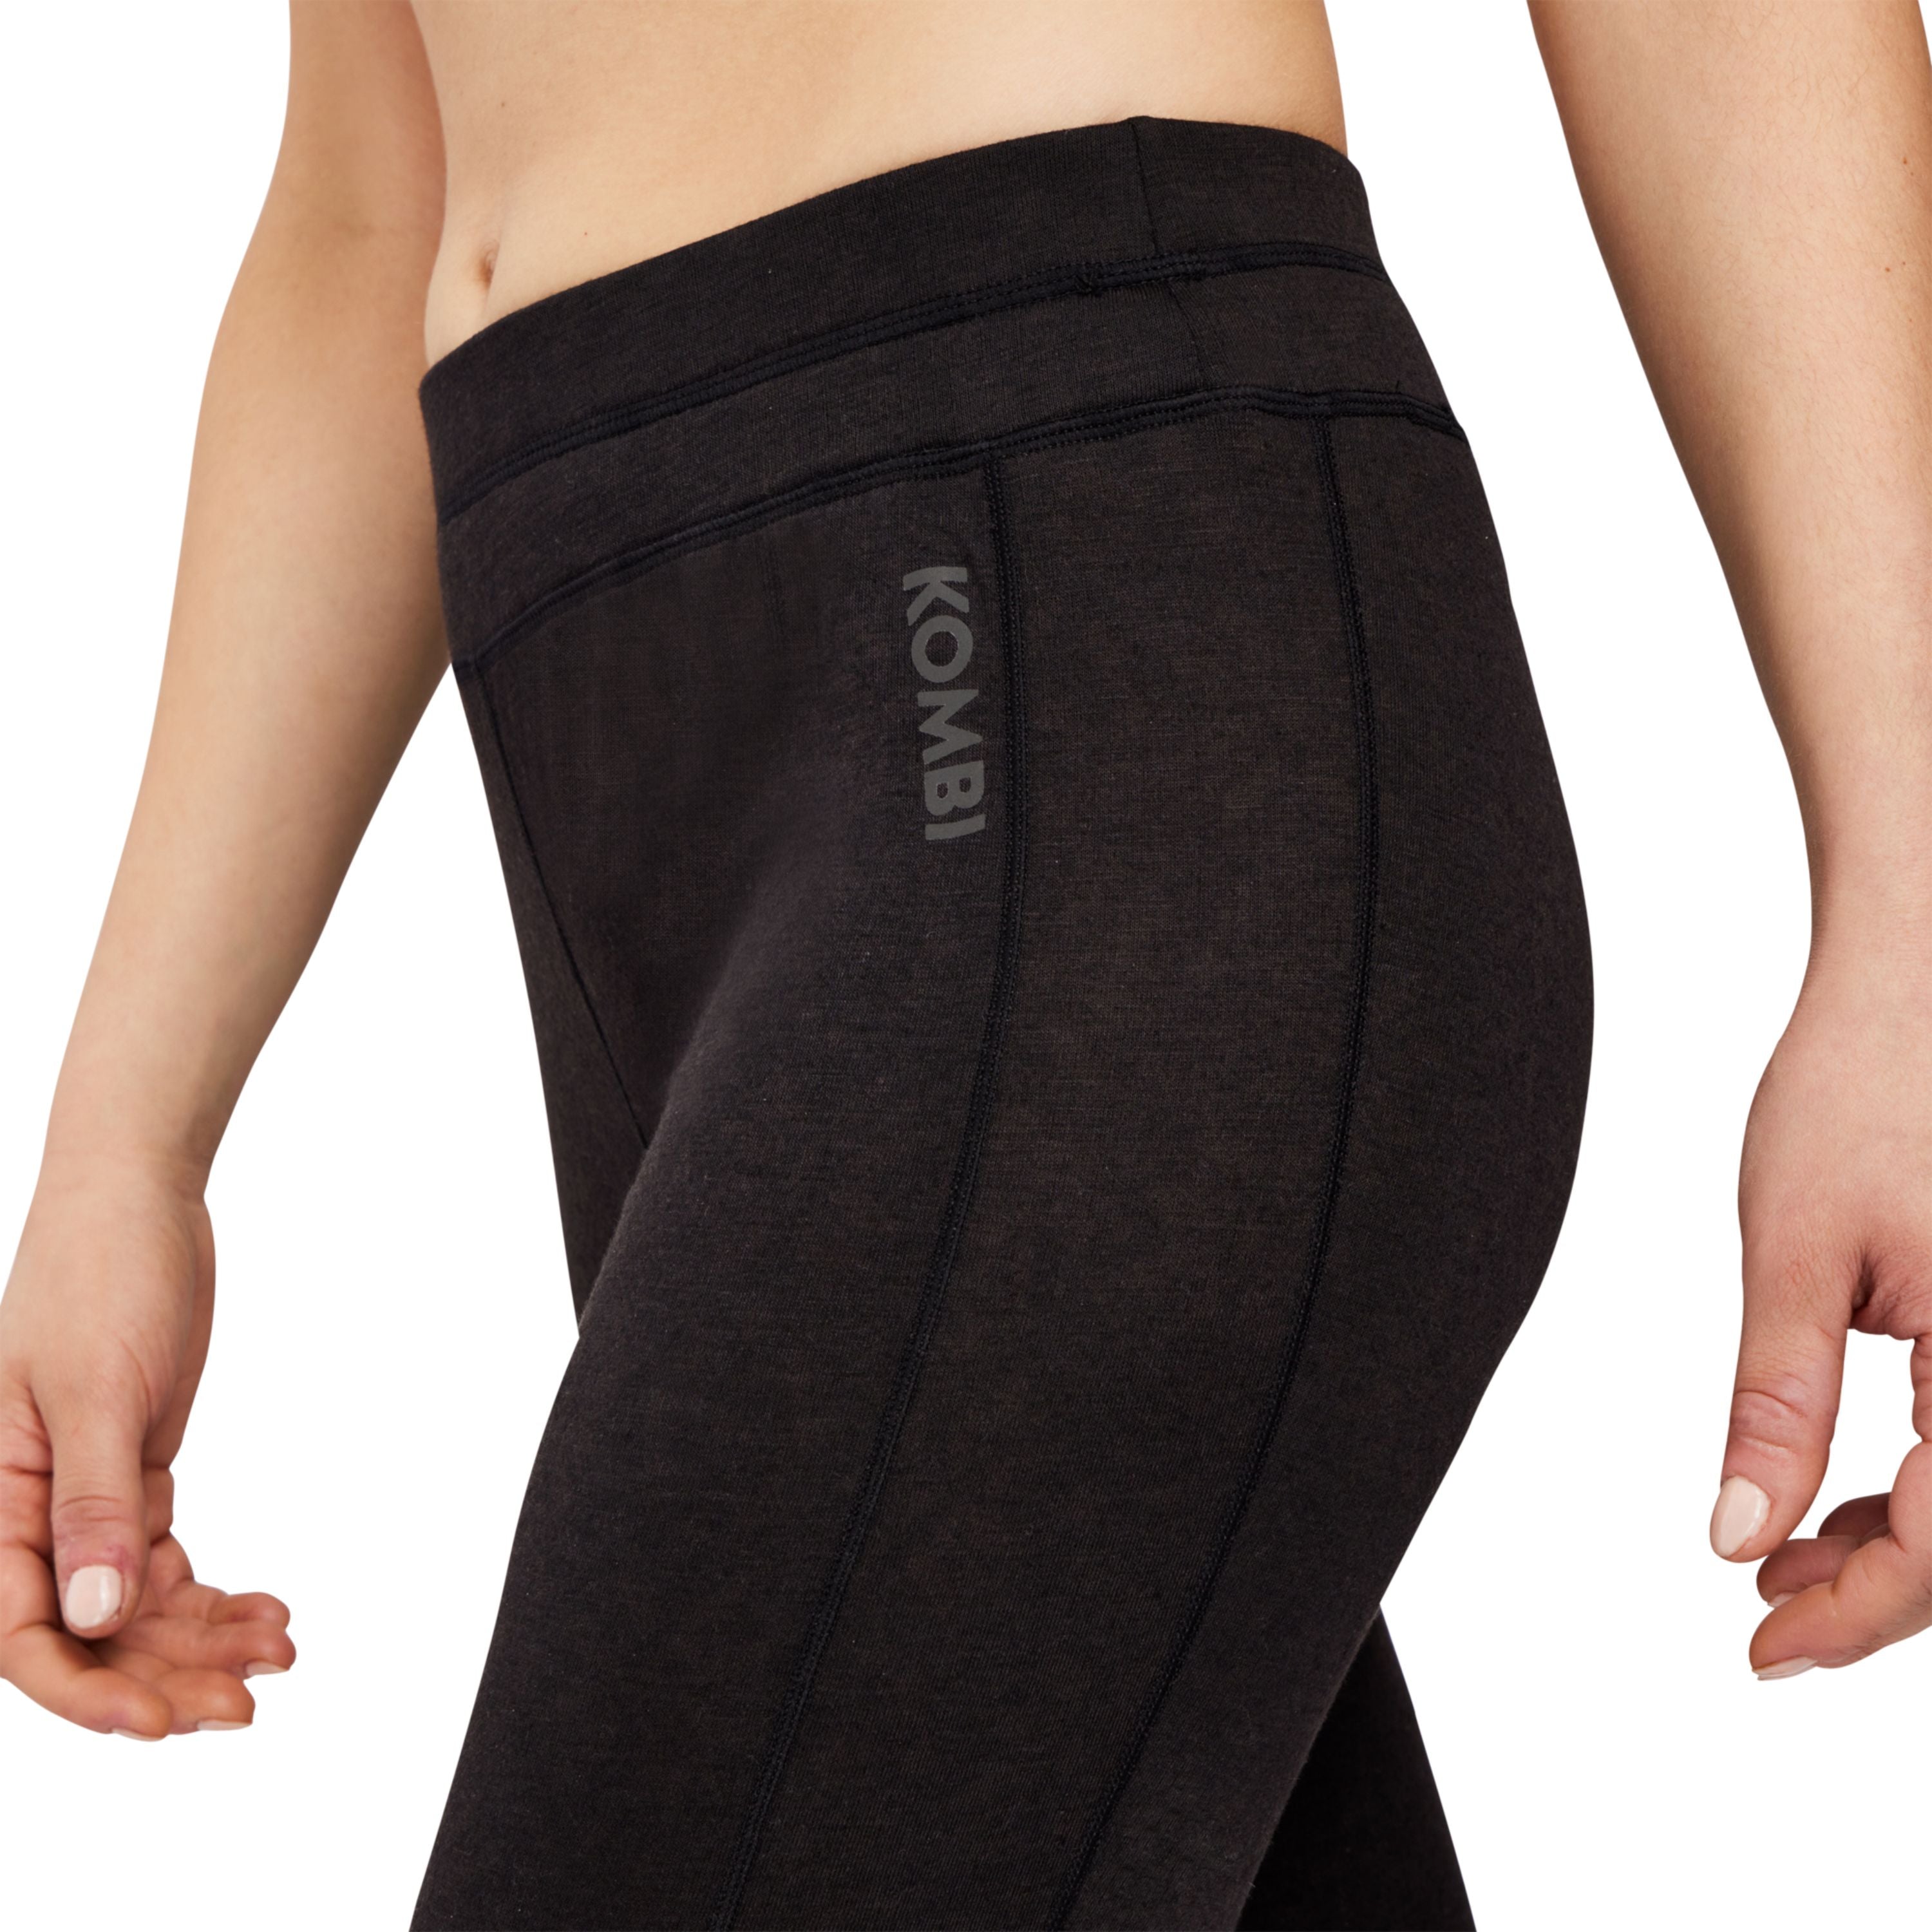 Pantalon sous-vêtement "Merinomix Pro" - Femme||"Merinomix Pro" Base layer bottom - Women’s